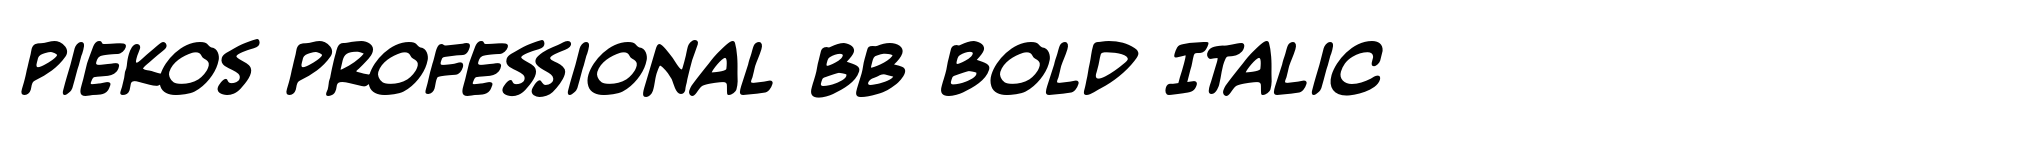 Piekos Professional BB Bold Italic image